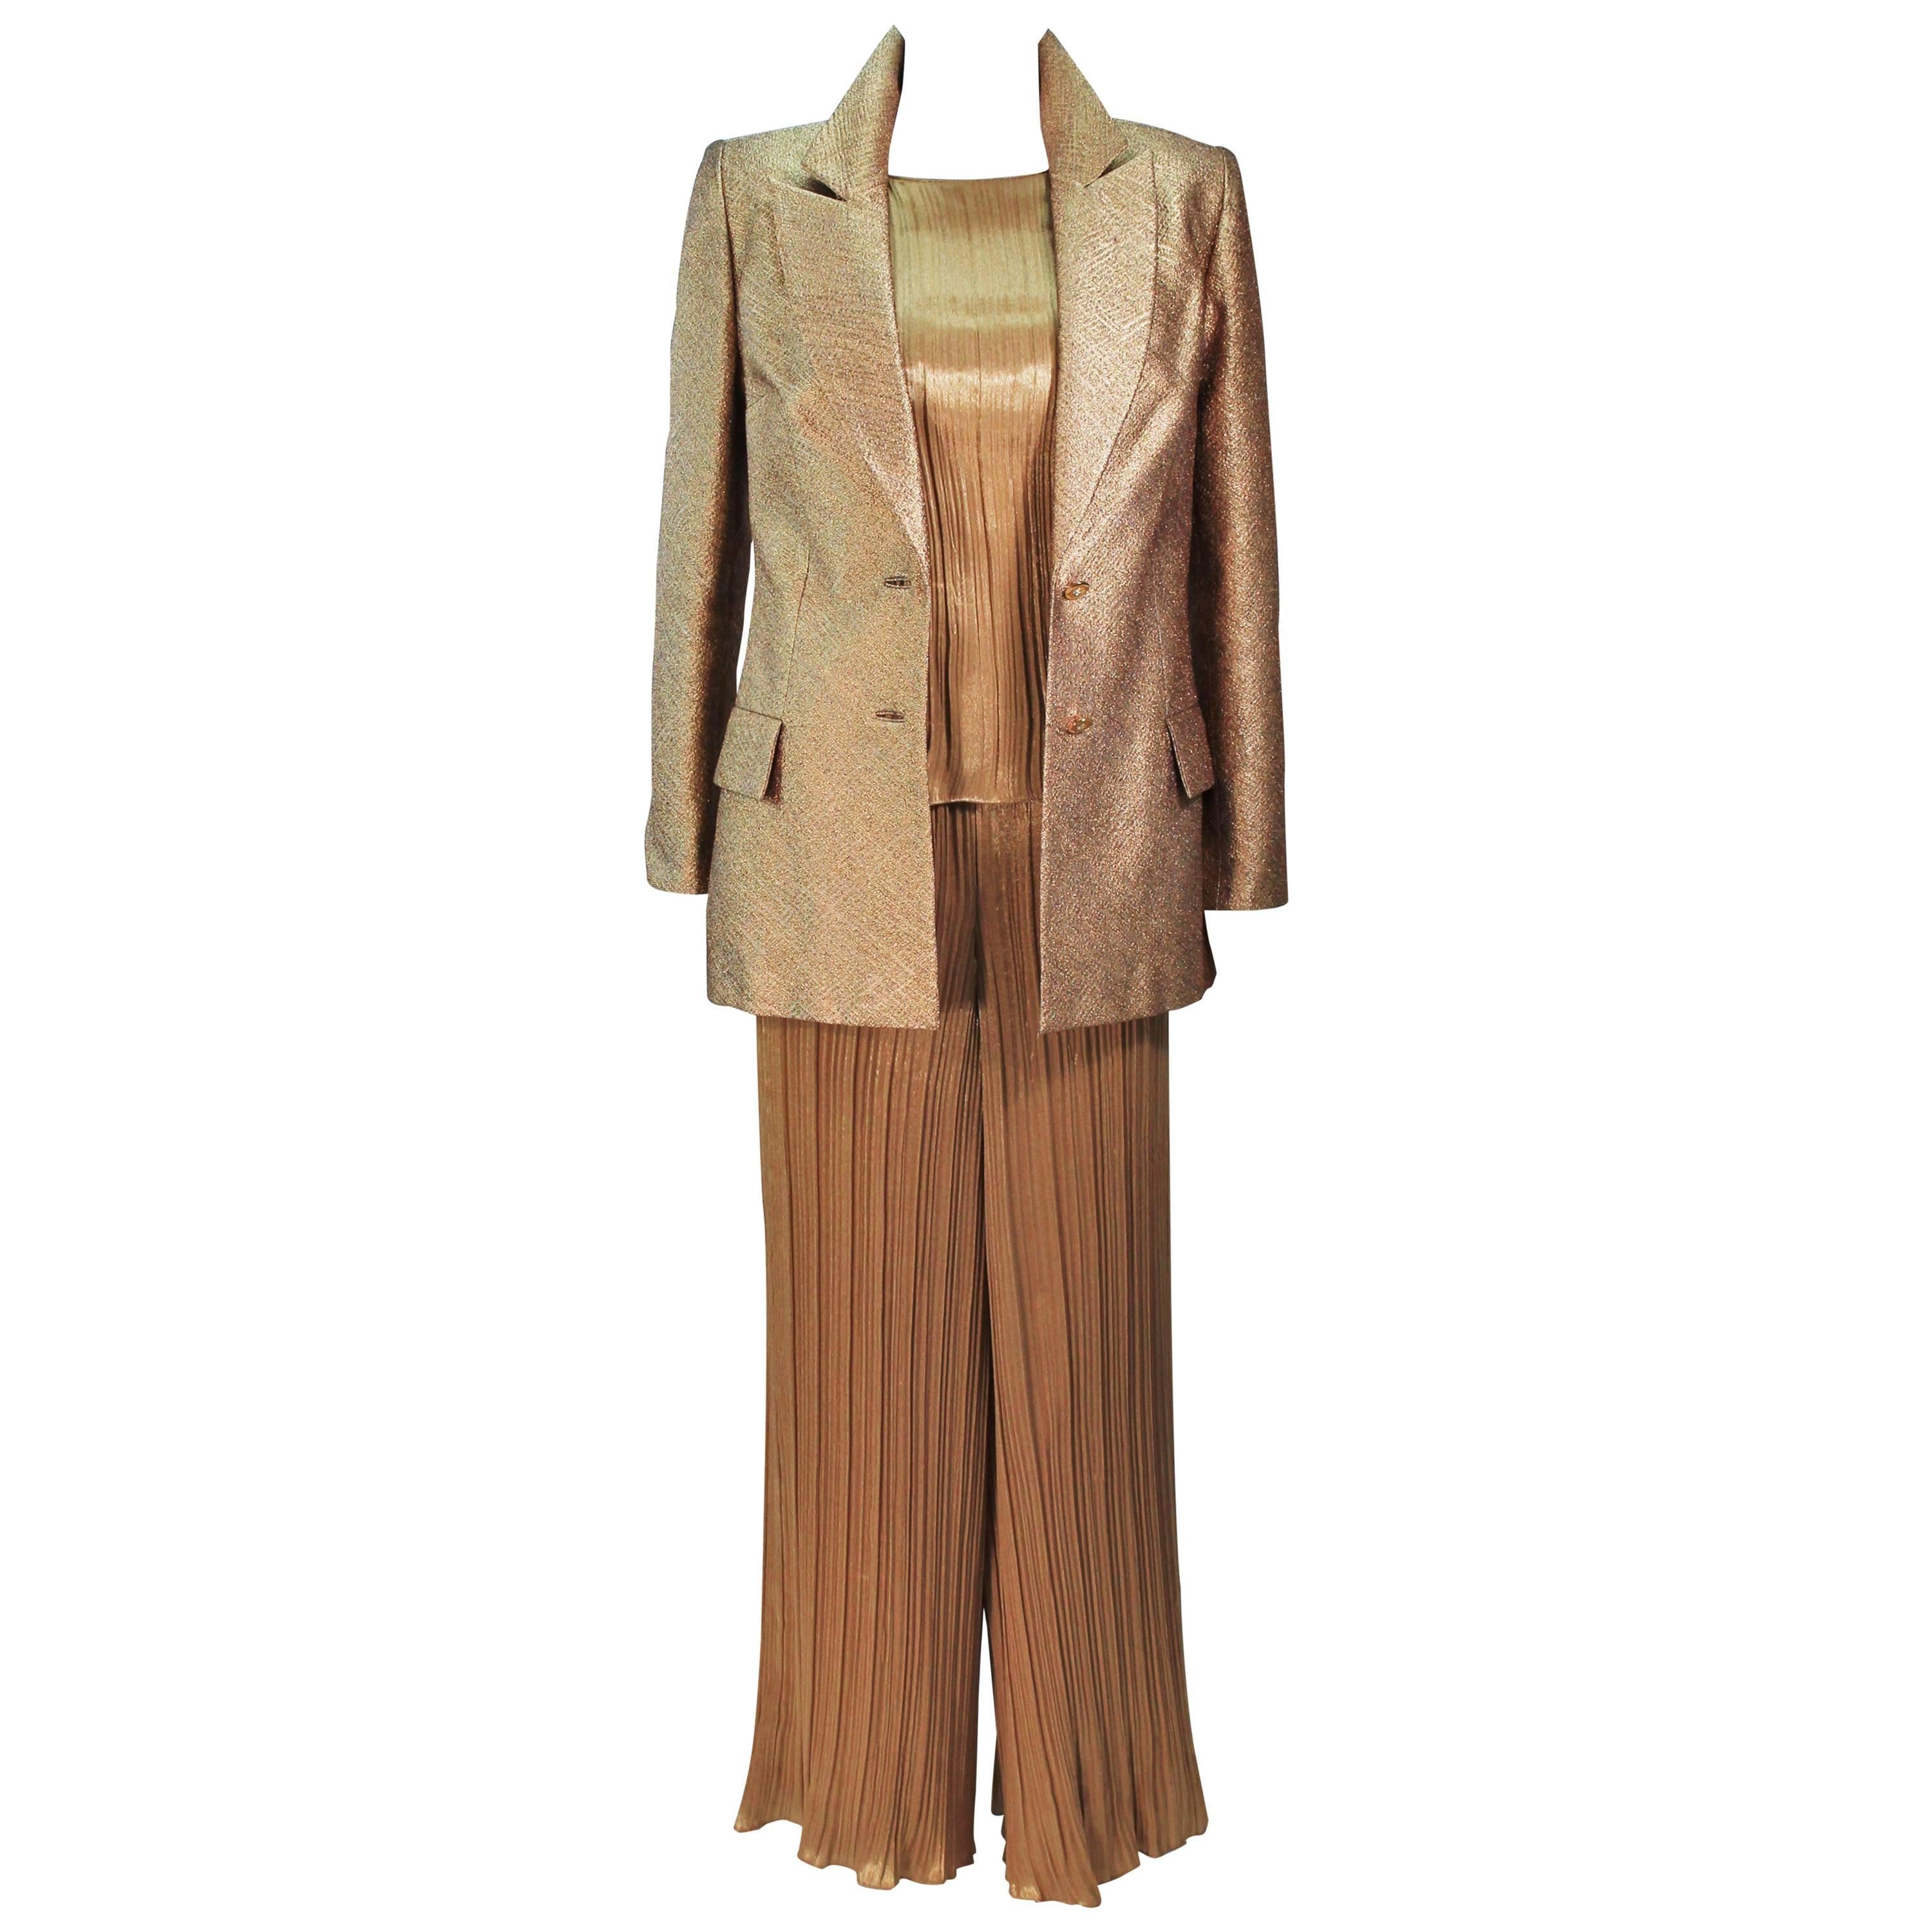 TRAVILLA Gold Metallic Silk Lame Pant Suit Ensemble Size 6 For Sale